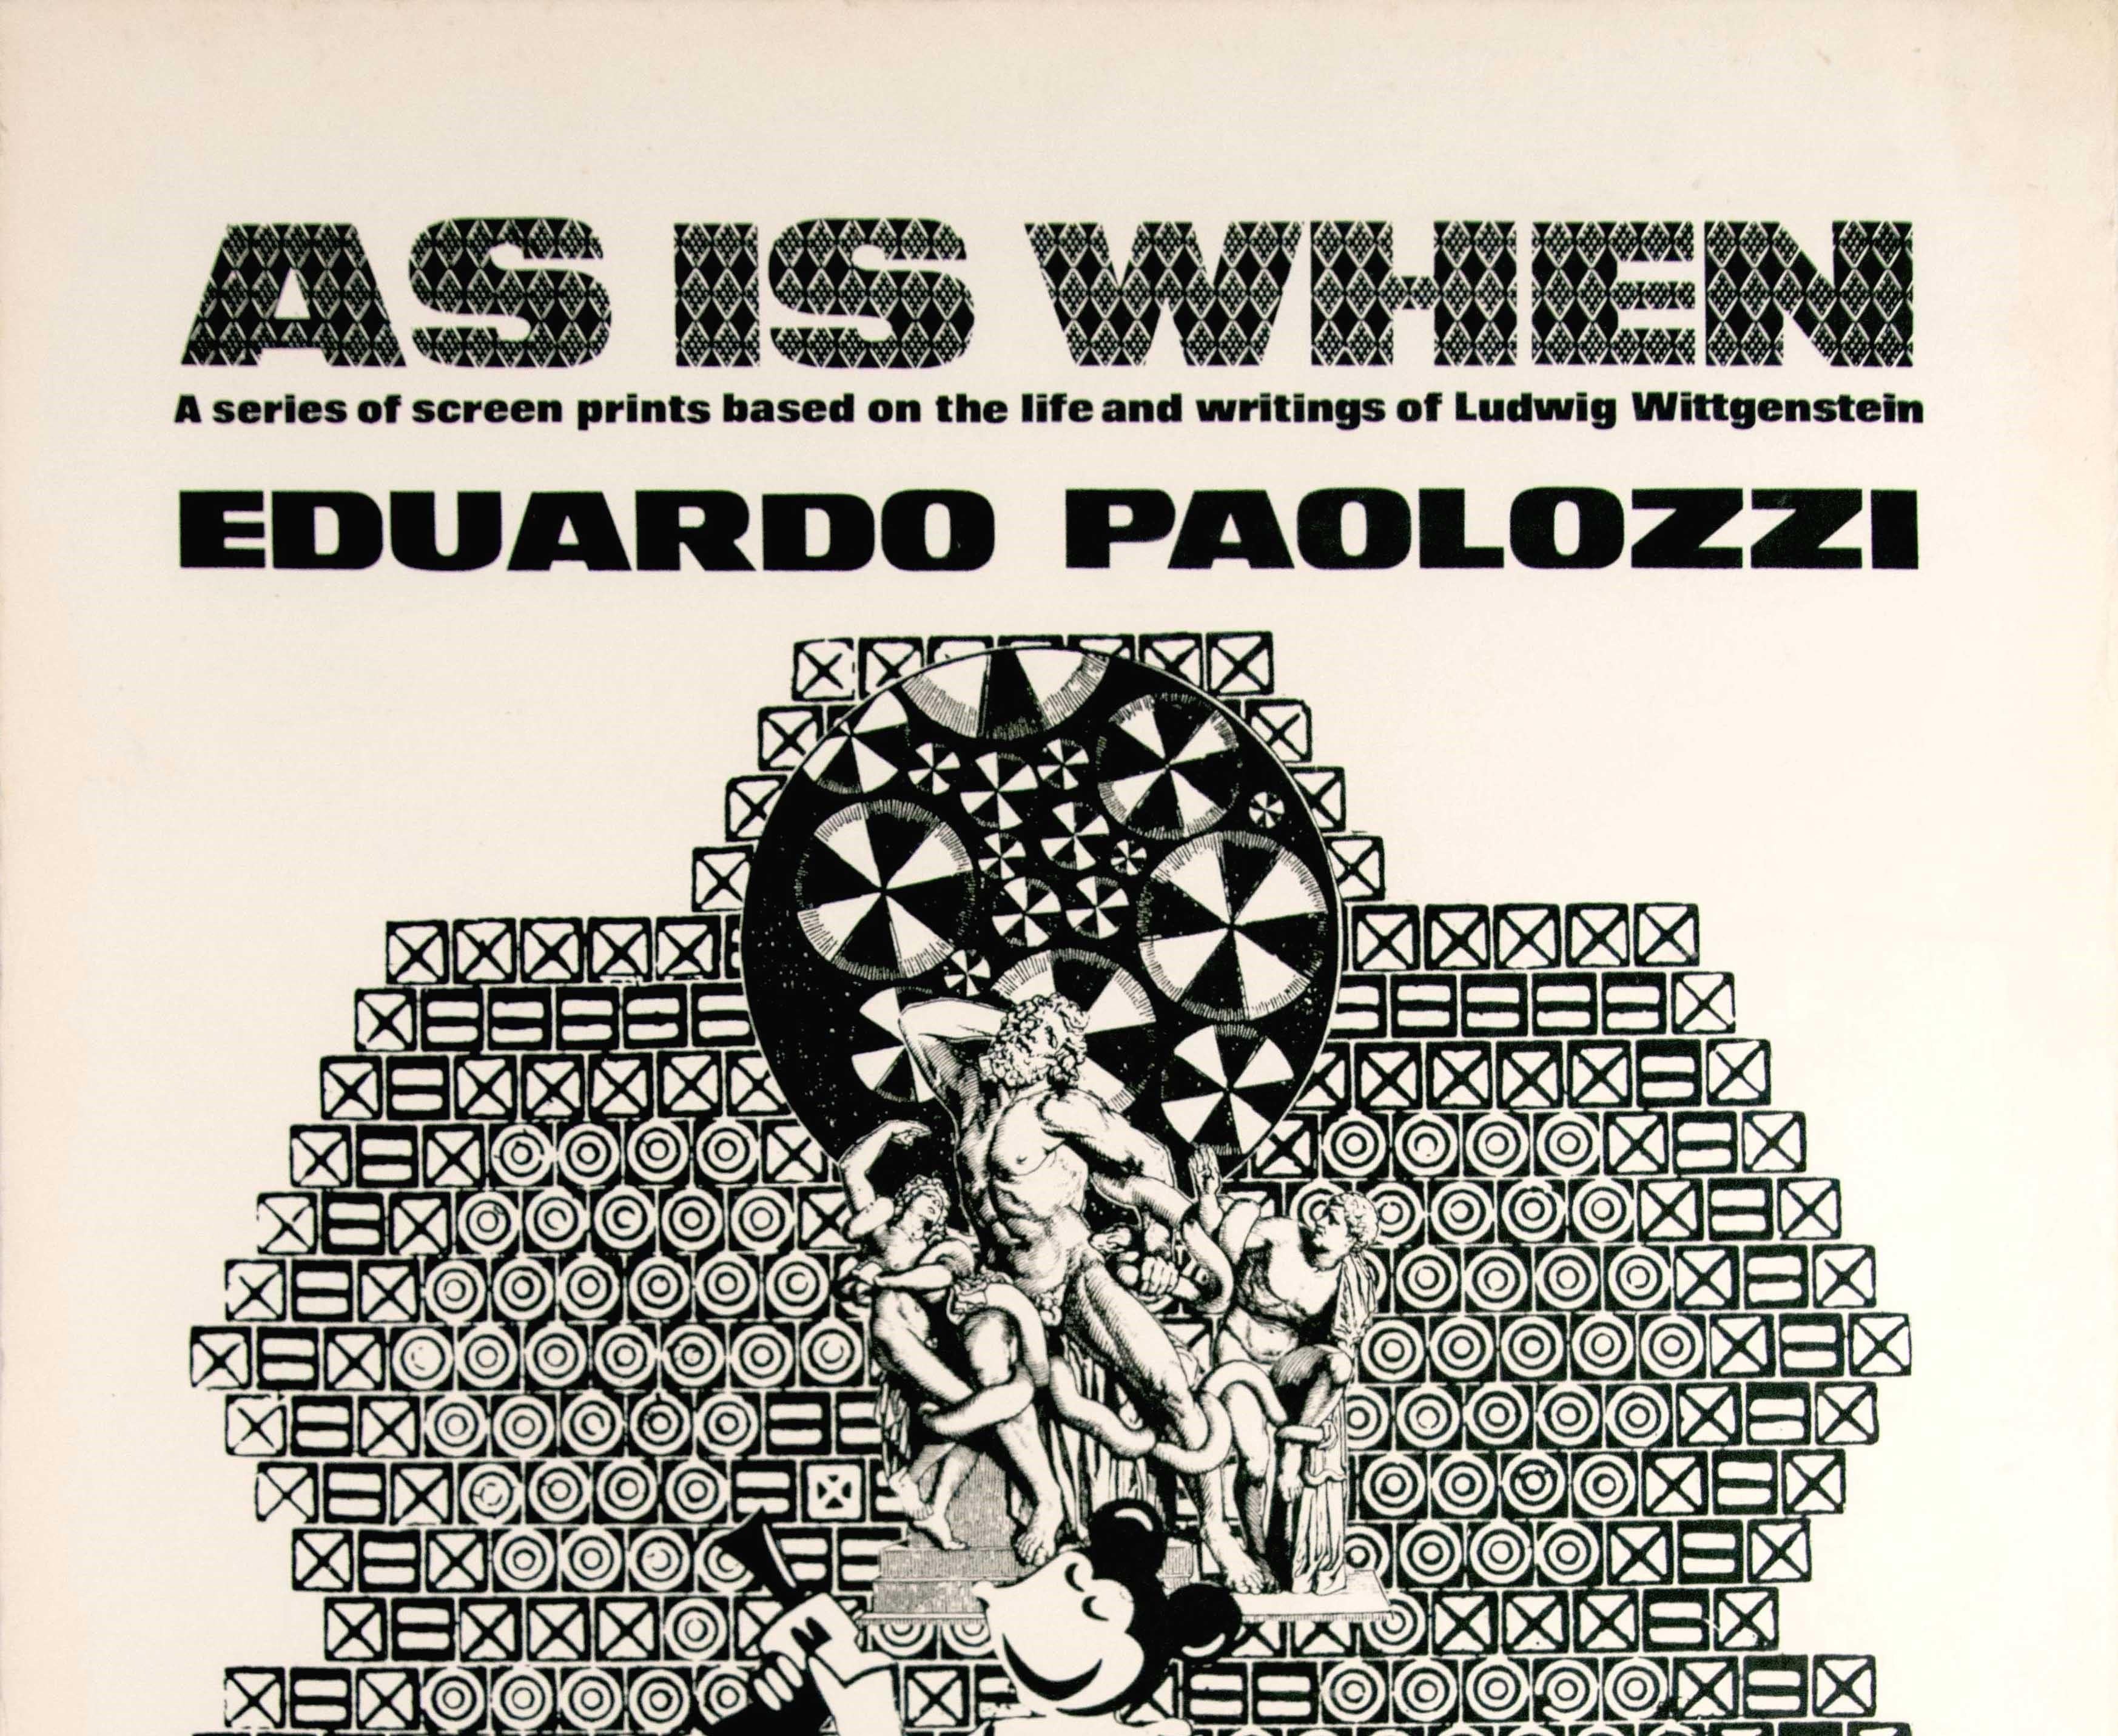 Original Vintage Poster As Is When Paolozzi Art Exhibition Ludwig Wittgenstein - Print by Eduardo Paolozzi